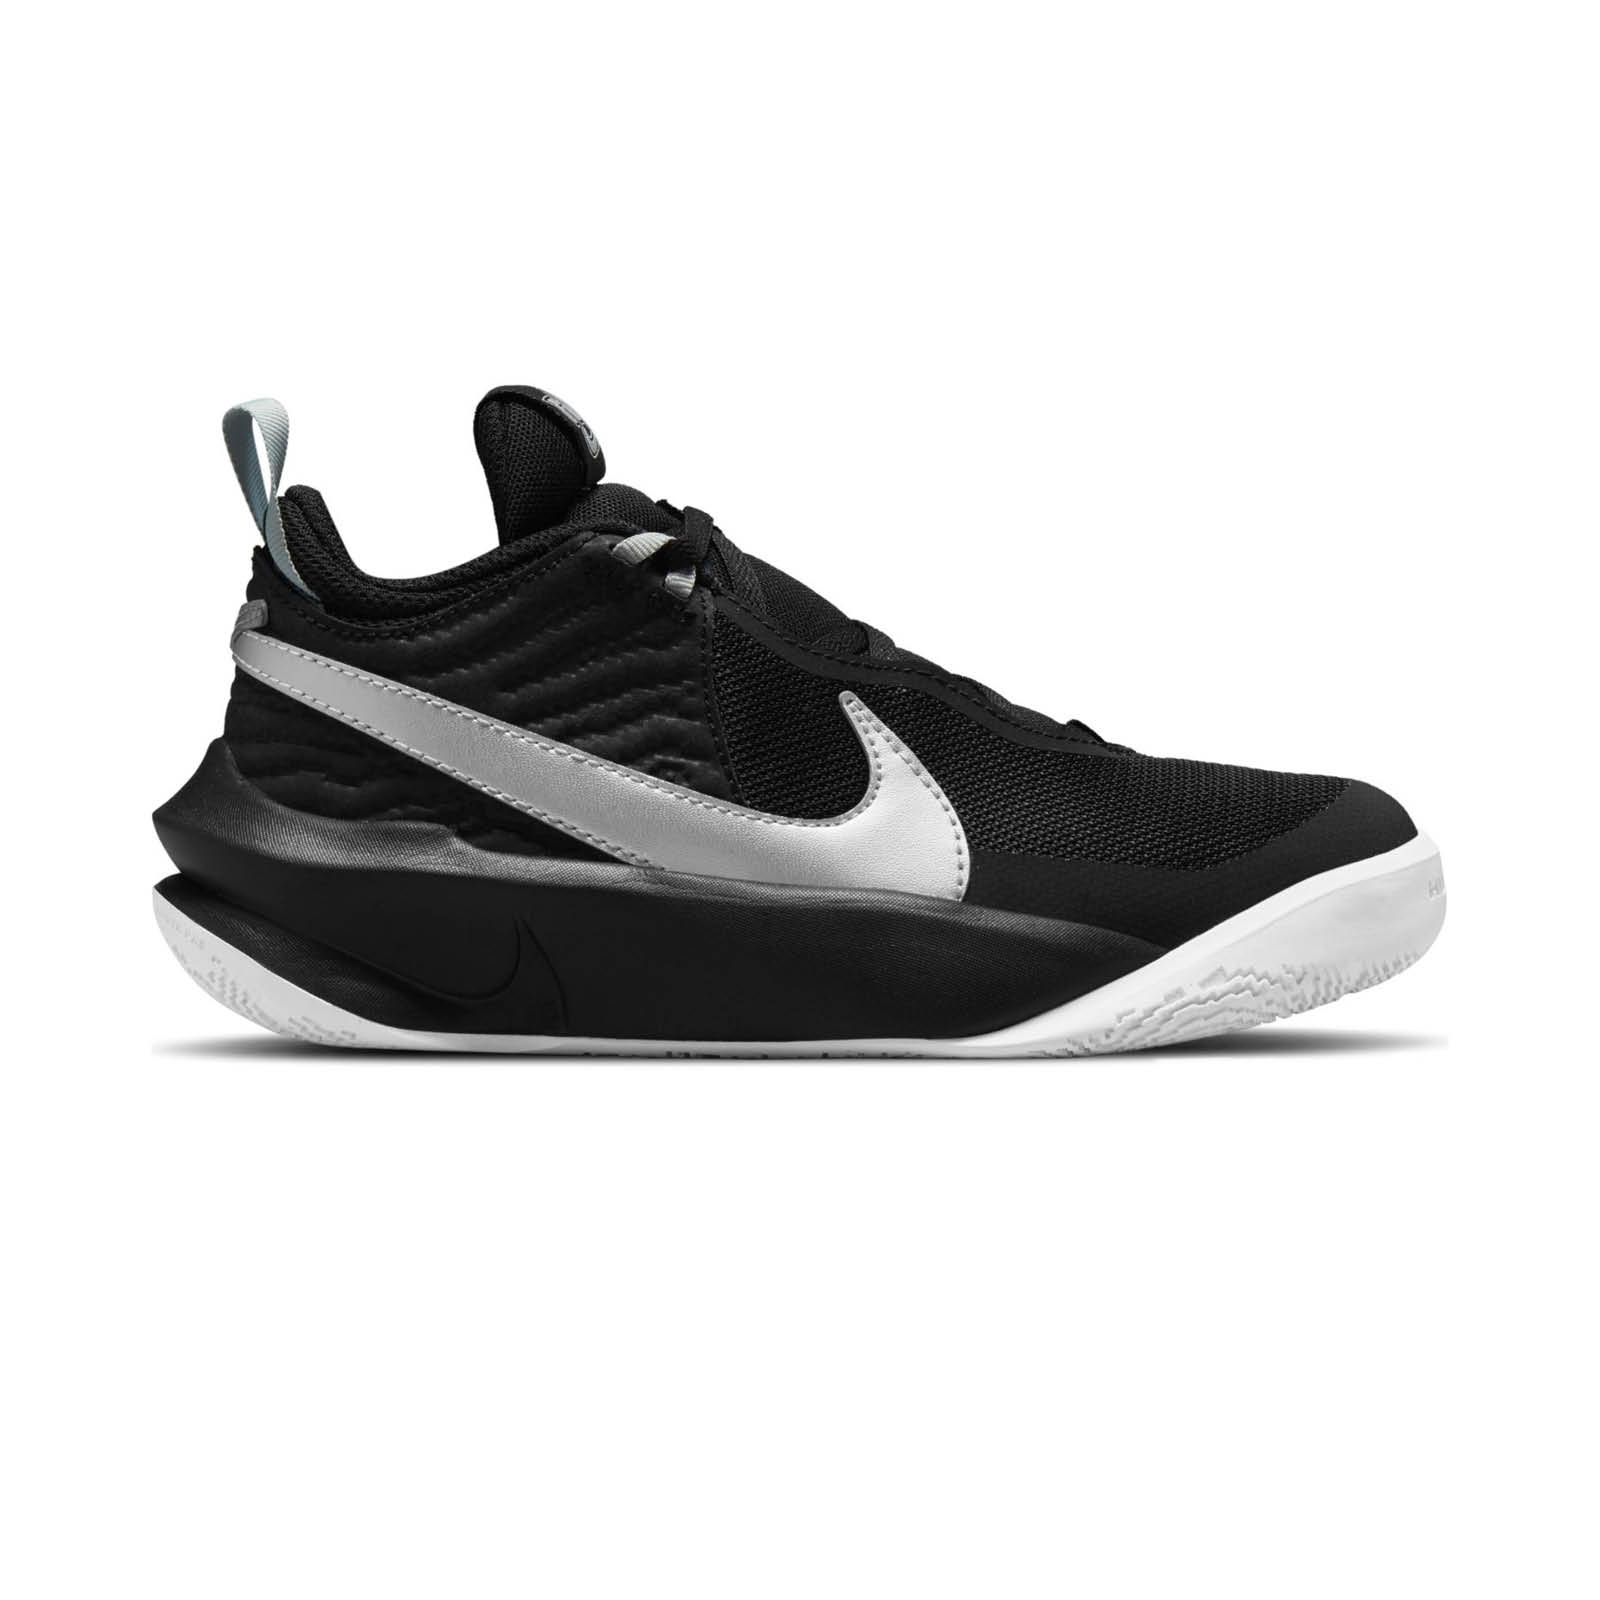 Nike - TEAM HUSTLE D 10 (GS) - BLACK/METALLIC SILVER-VOLT-WHITE Παιδικά > Παπούτσια > Αθλητικά > Μποτάκι High Cut